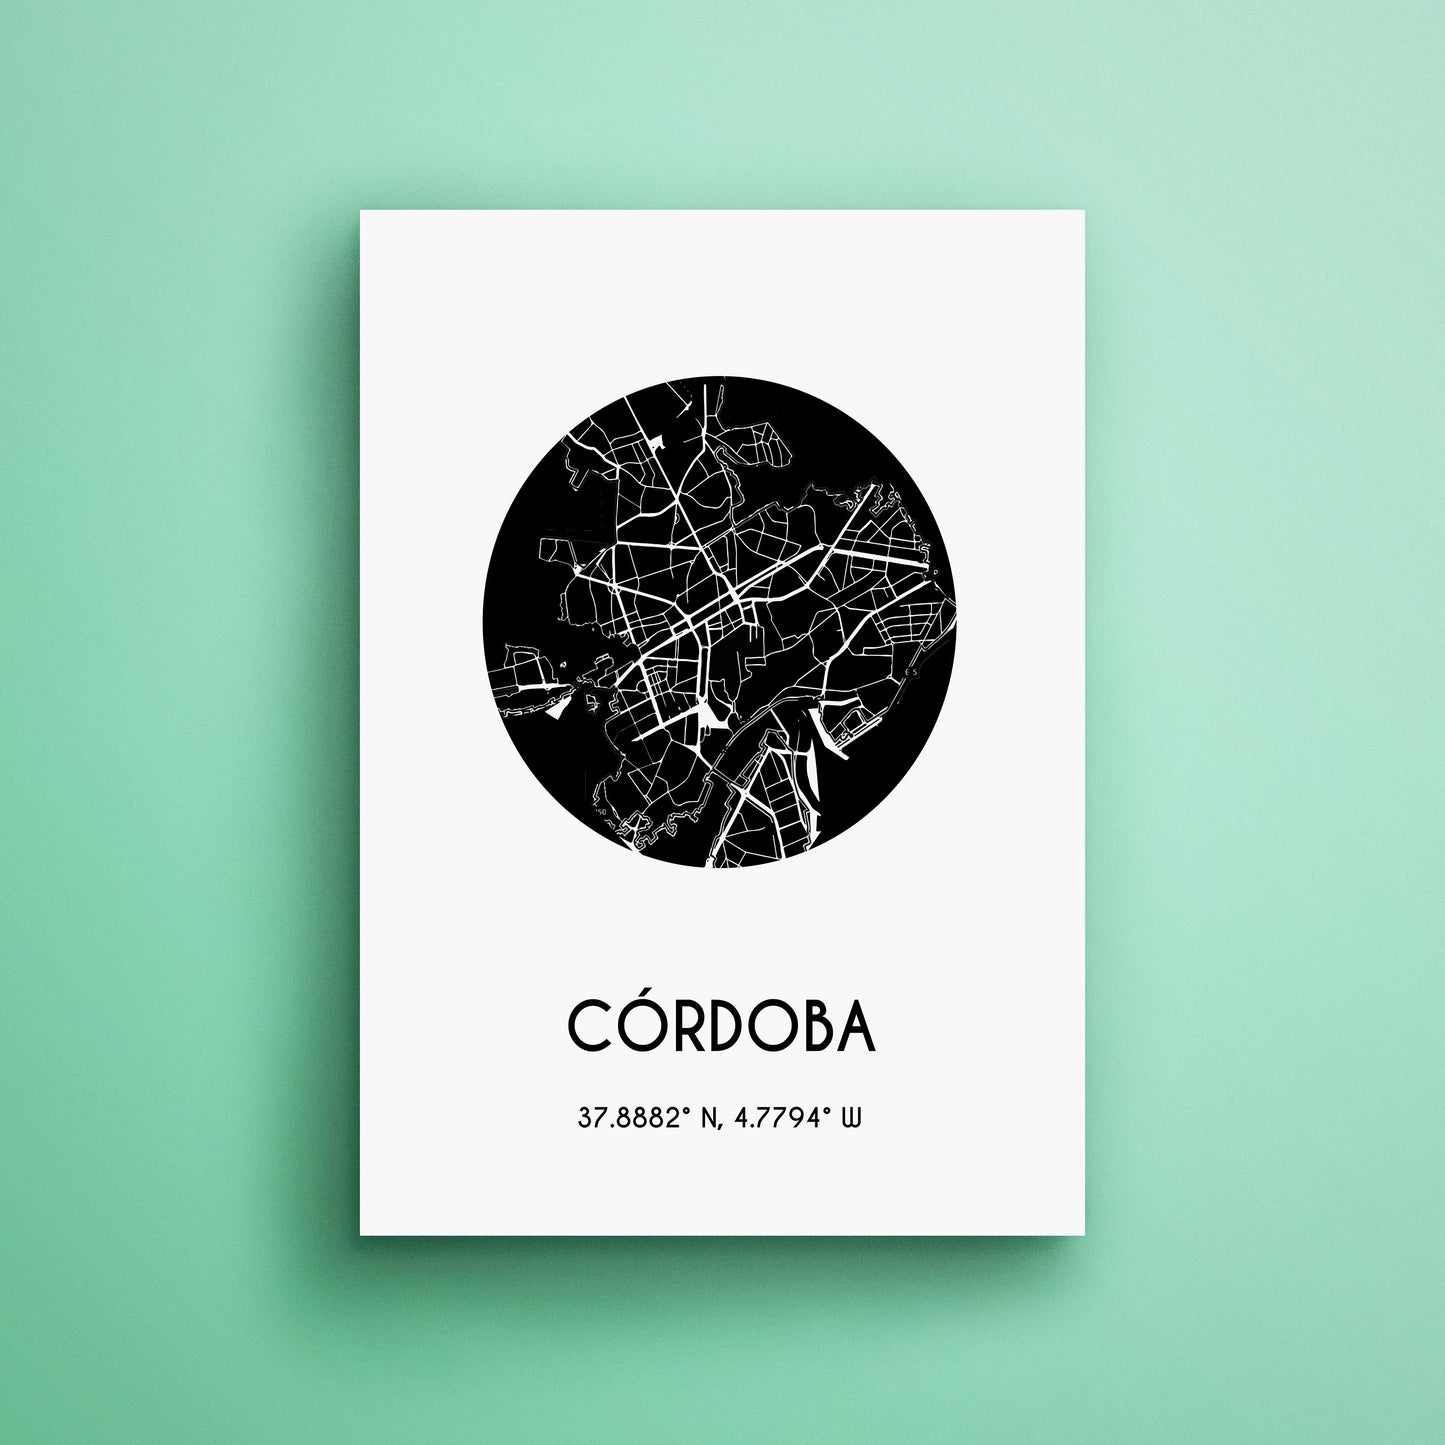 CORDOBA Print - DAMA store